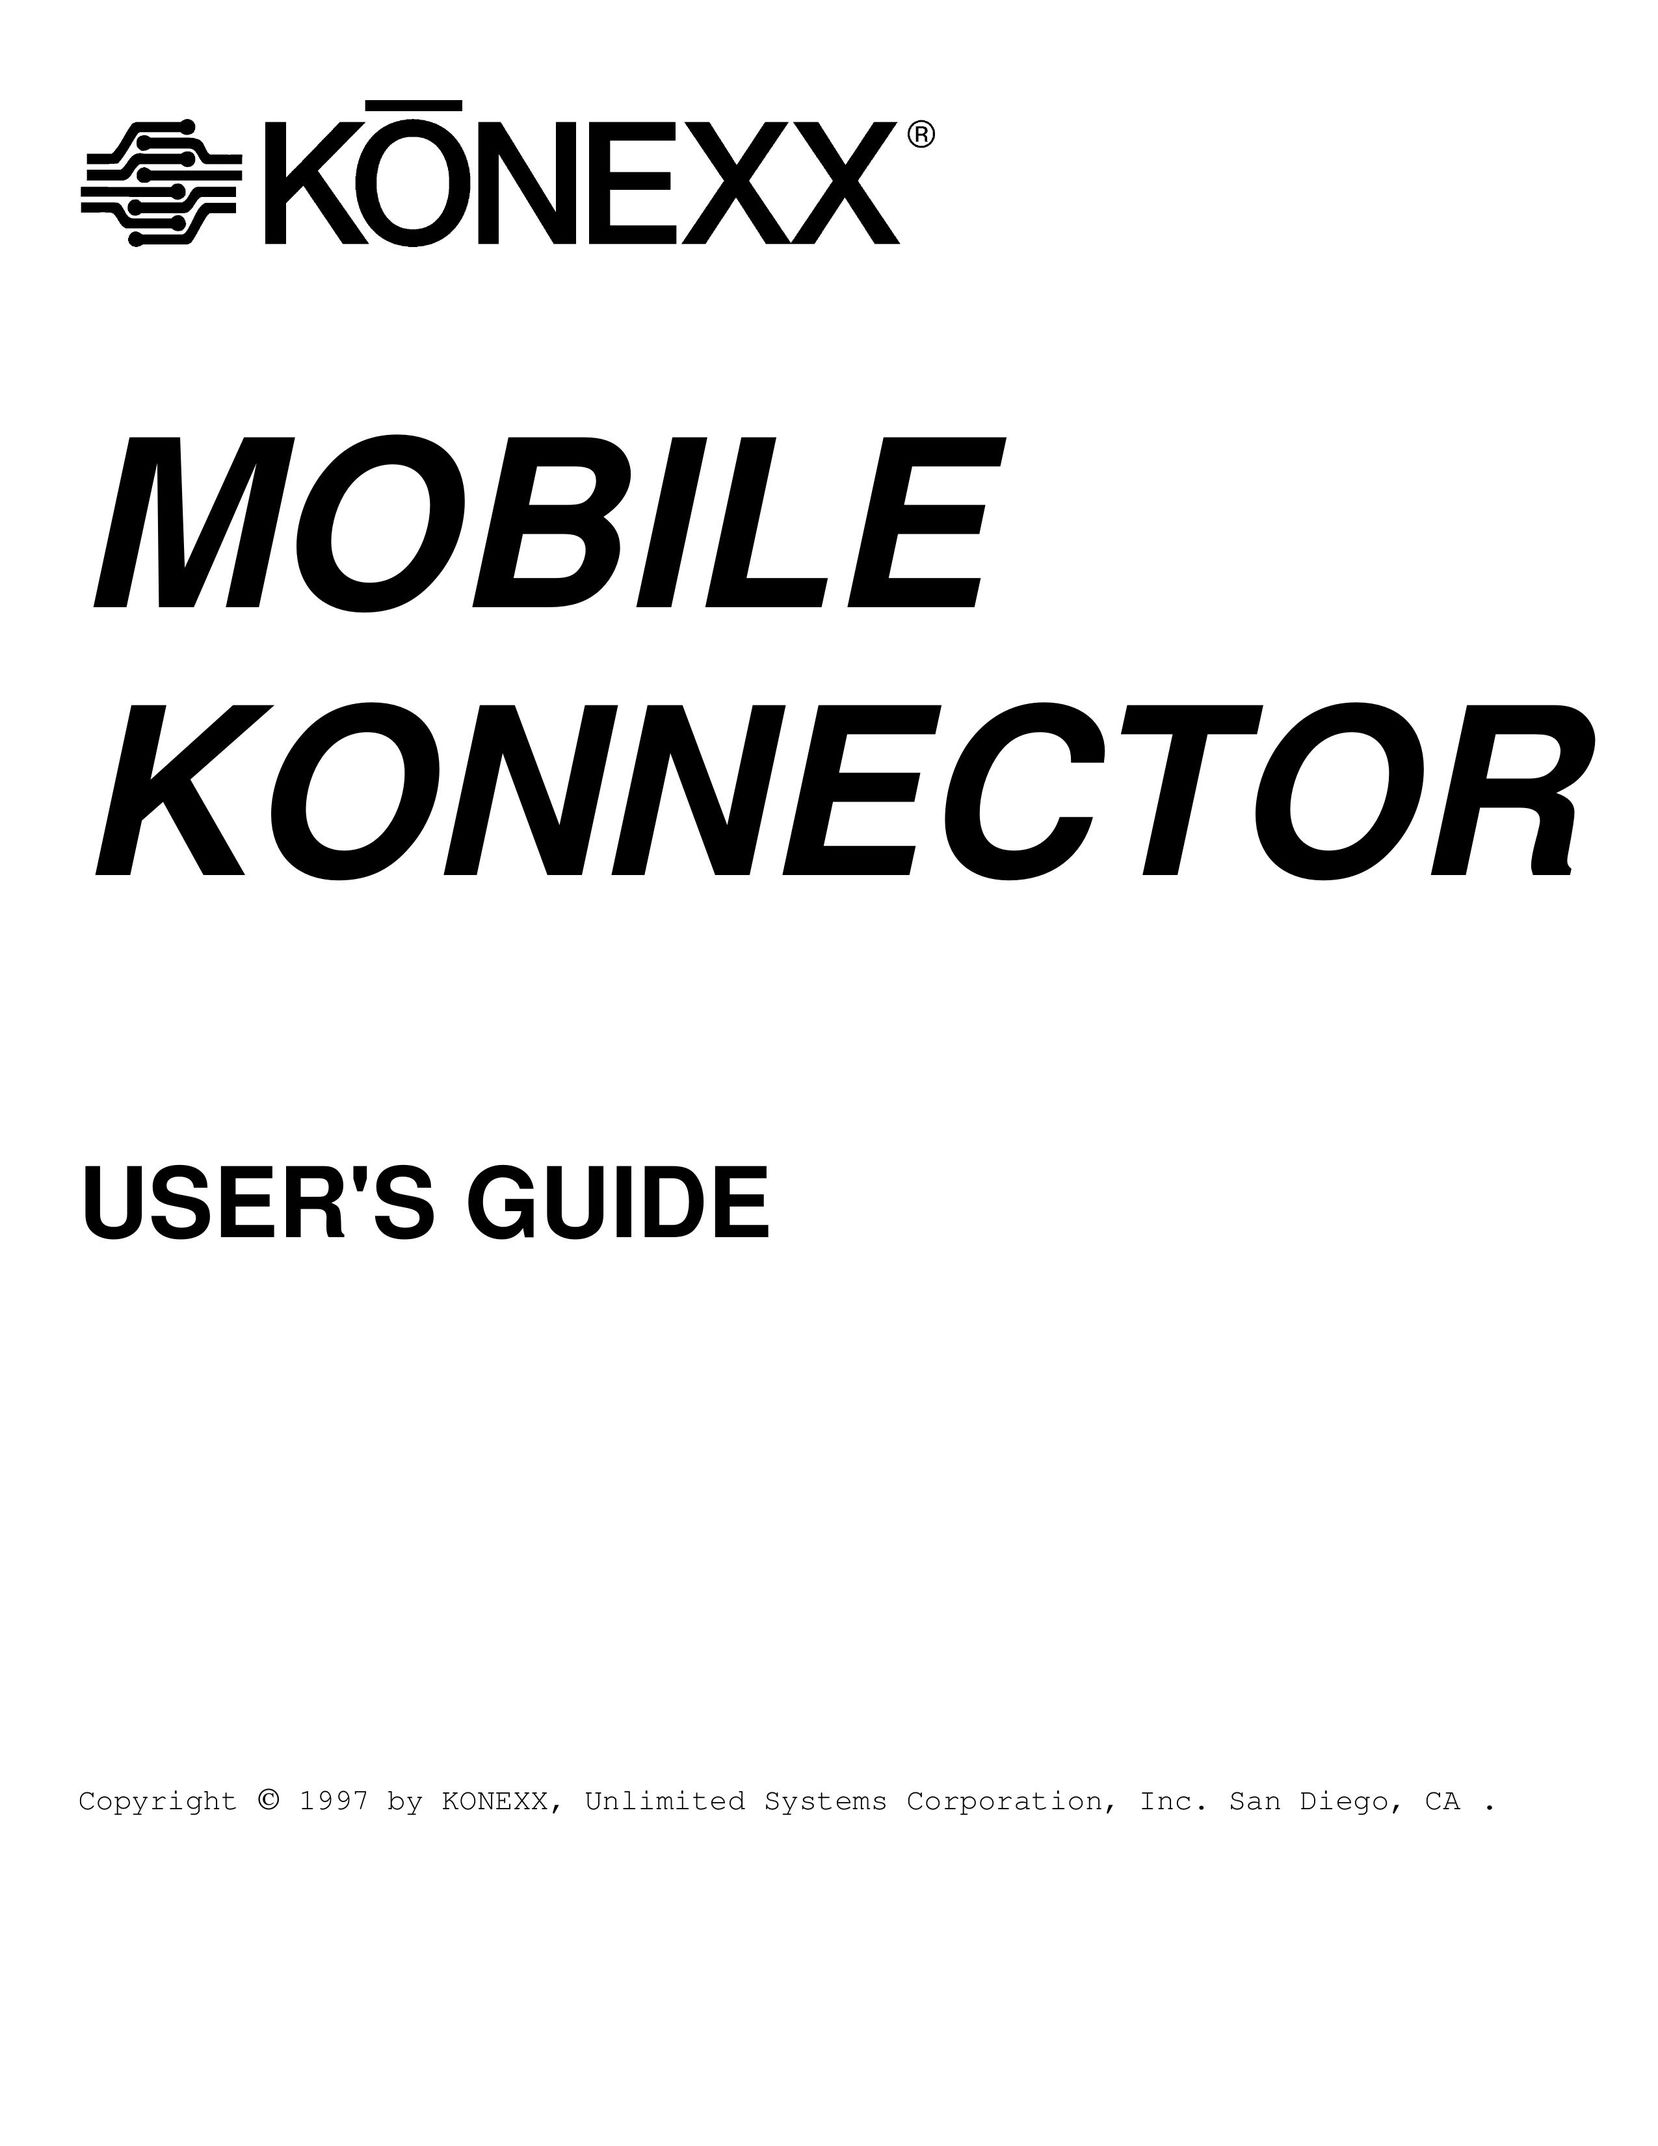 Konexx MOBILE KONNECTOR Network Card User Manual